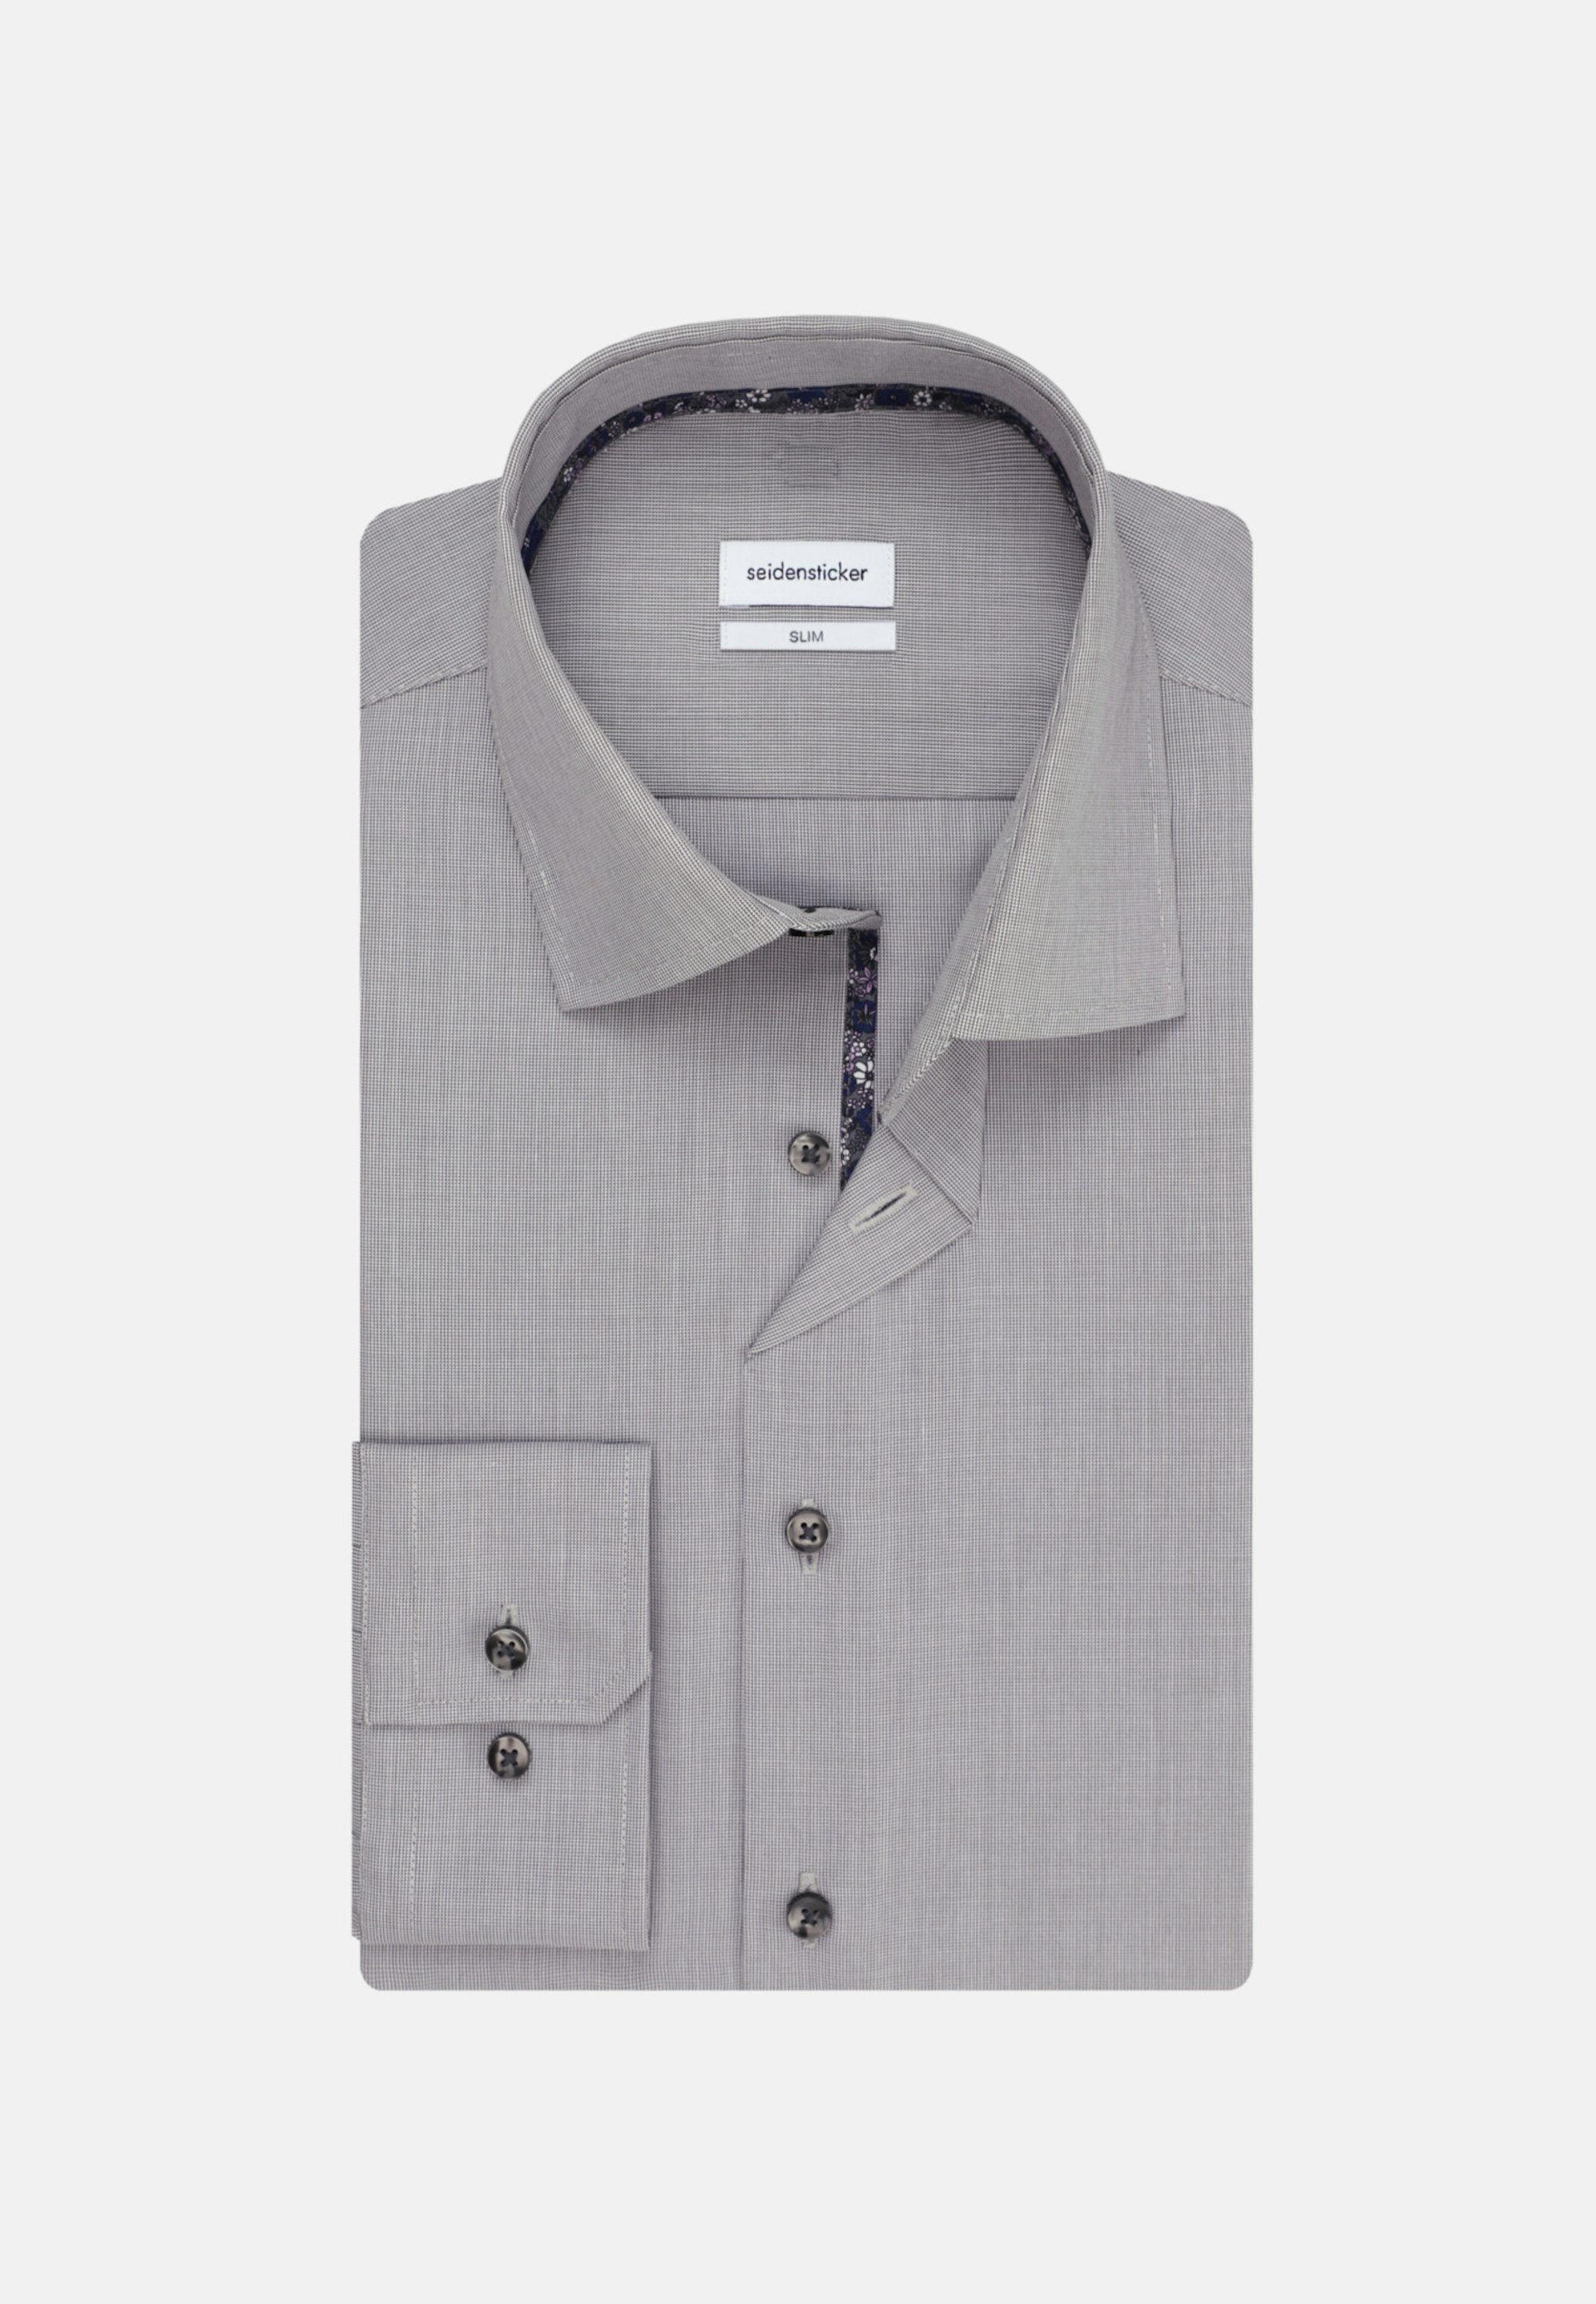 Men's Calvin Klein Slim Fit Non-Iron Dress Shirt 100% Cotton Casual Shirt  NEW